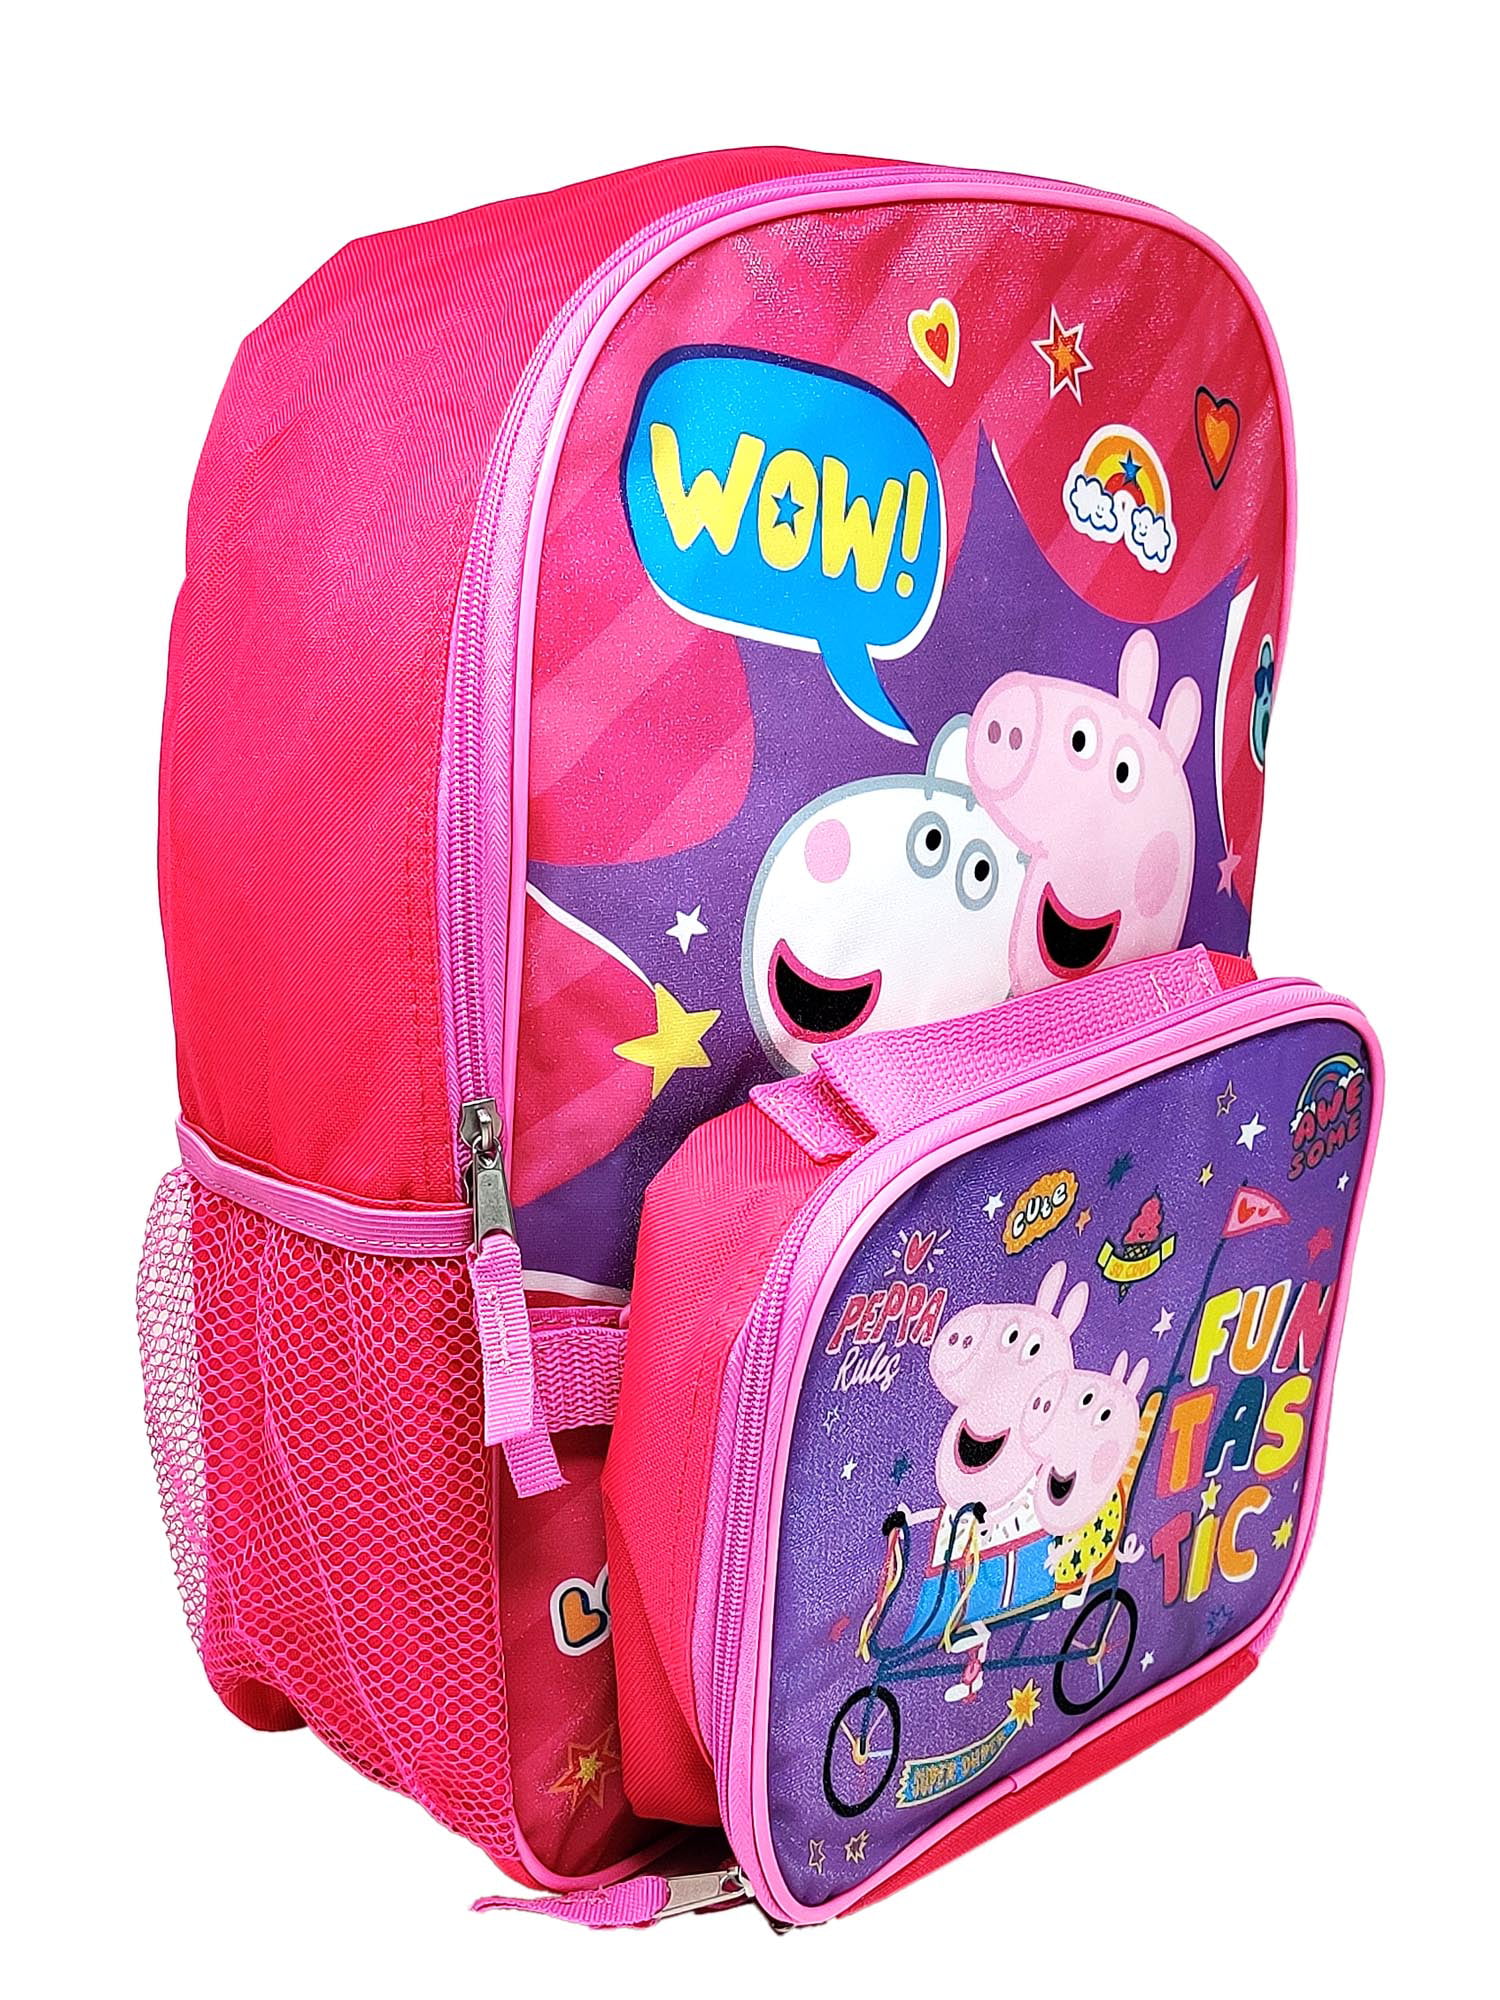 Buy Peppa Pig School Bag 14 Inch online in India on GiggleGlory.com